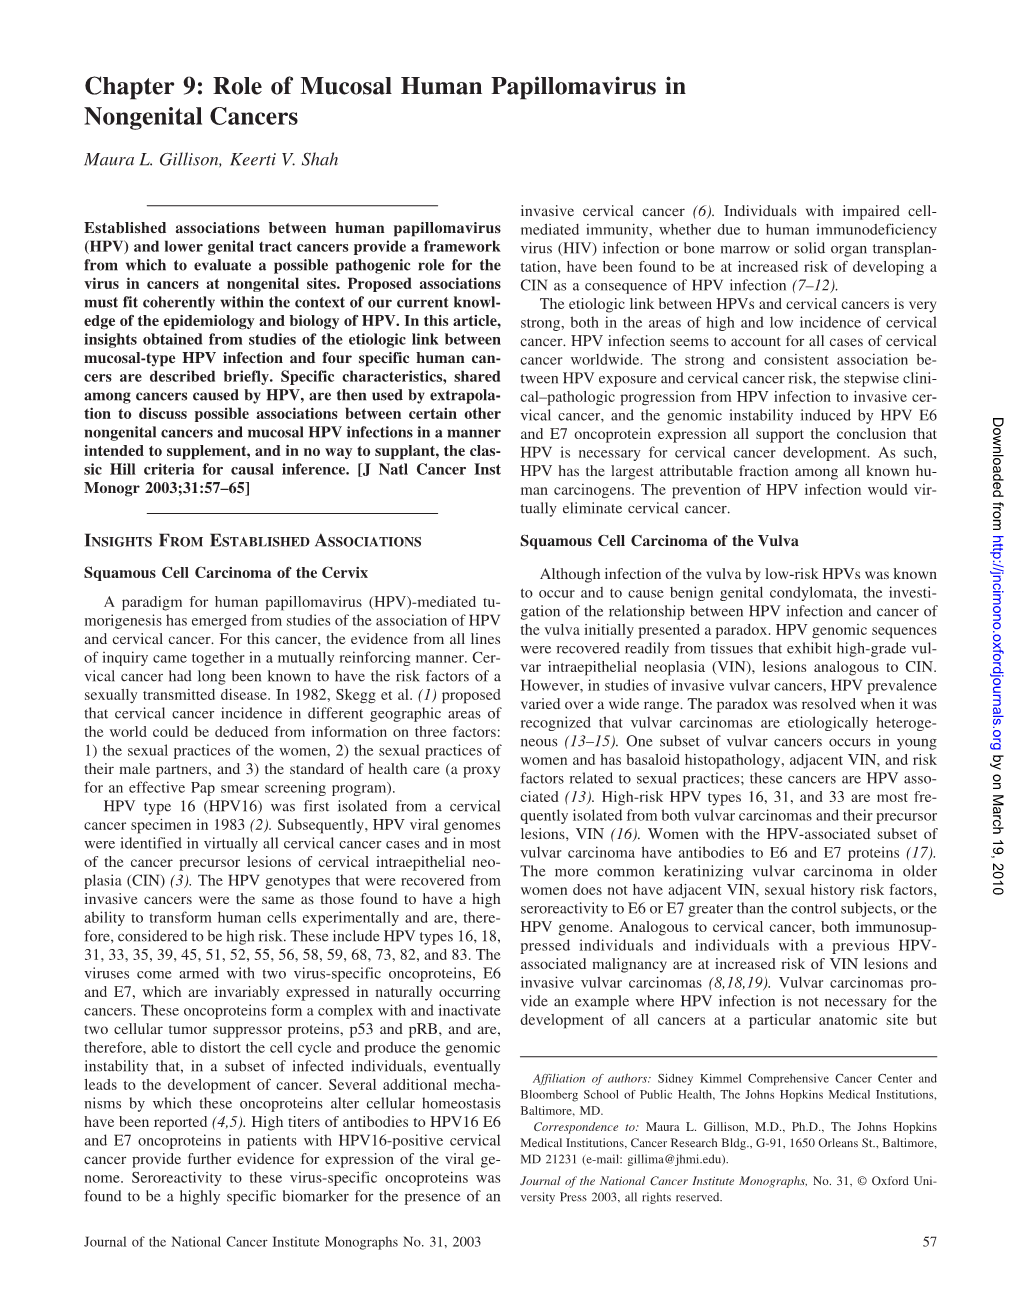 Chapter 9: Role of Mucosal Human Papillomavirus in Nongenital Cancers